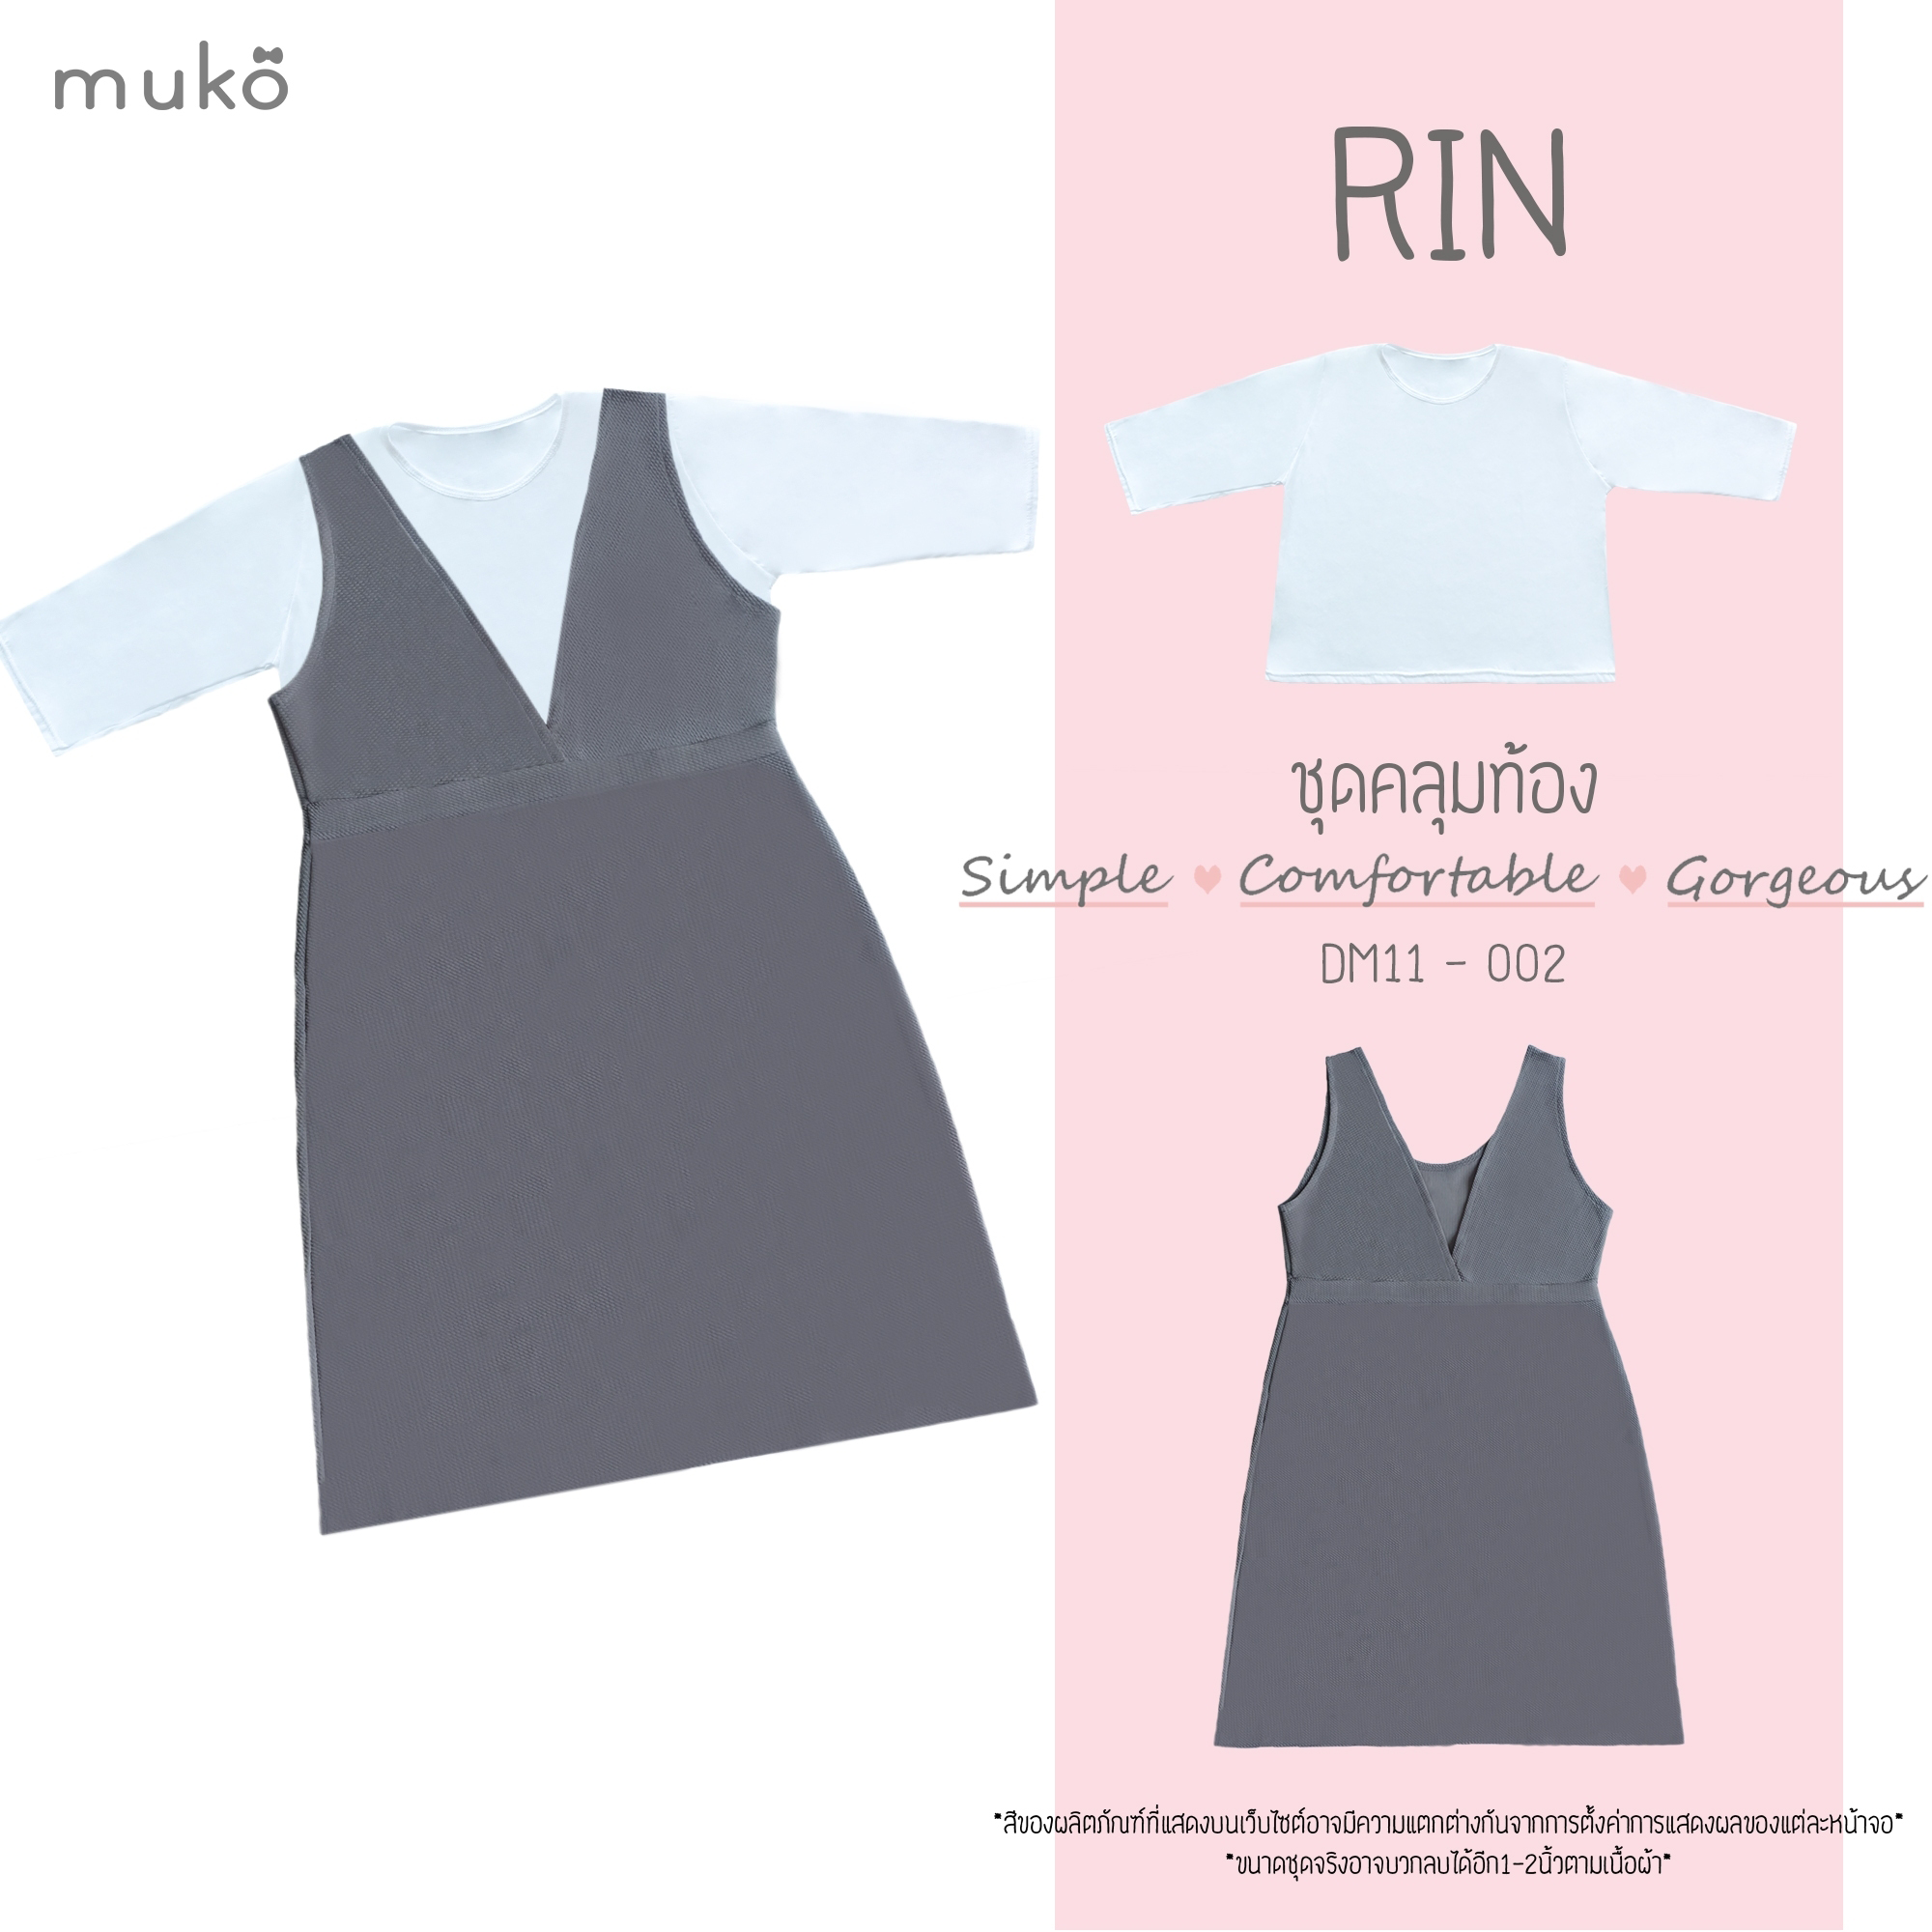 Muko Rin ชุดเซ็ต (เสื้อและกระโปรงเอี๊ยม) คลุมท้องหรือจะใส่แฟชั่นสวยๆก็ได้นะคะ DM11-002 สีเทา